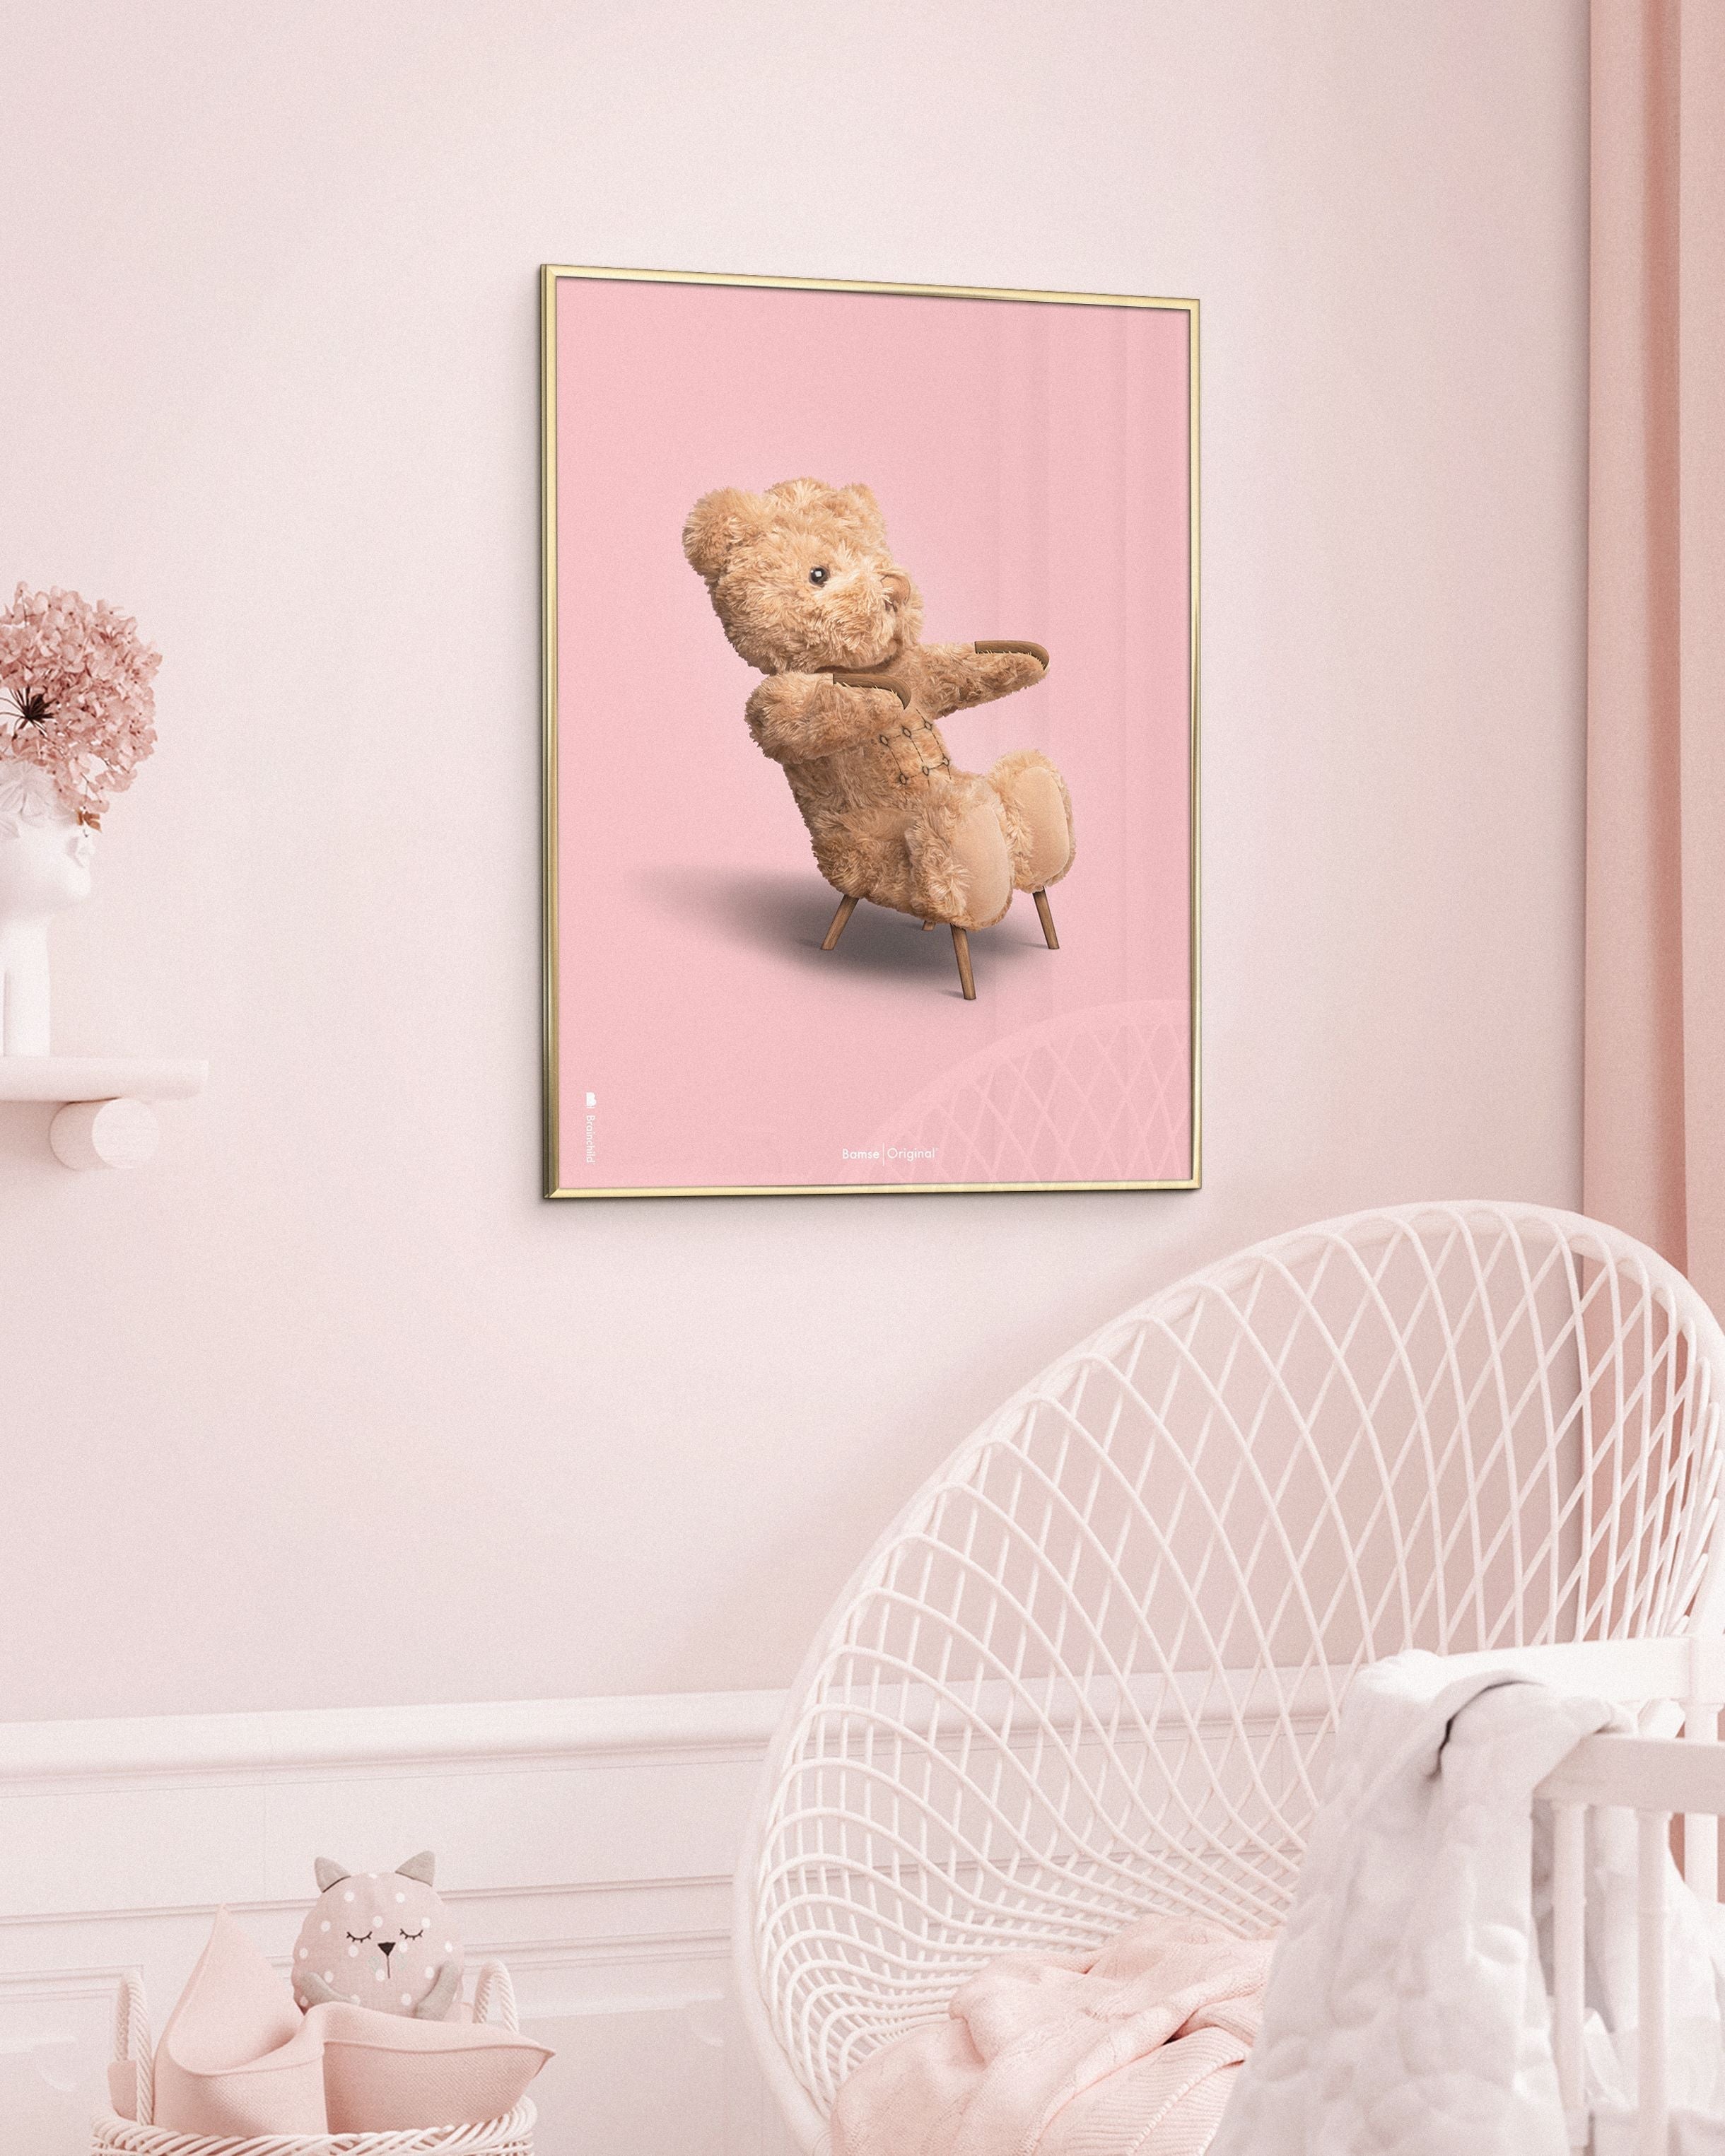 Brainchild Teddybär Classic Poster ohne Rahmen 50x70 Cm, rosa Hintergrund